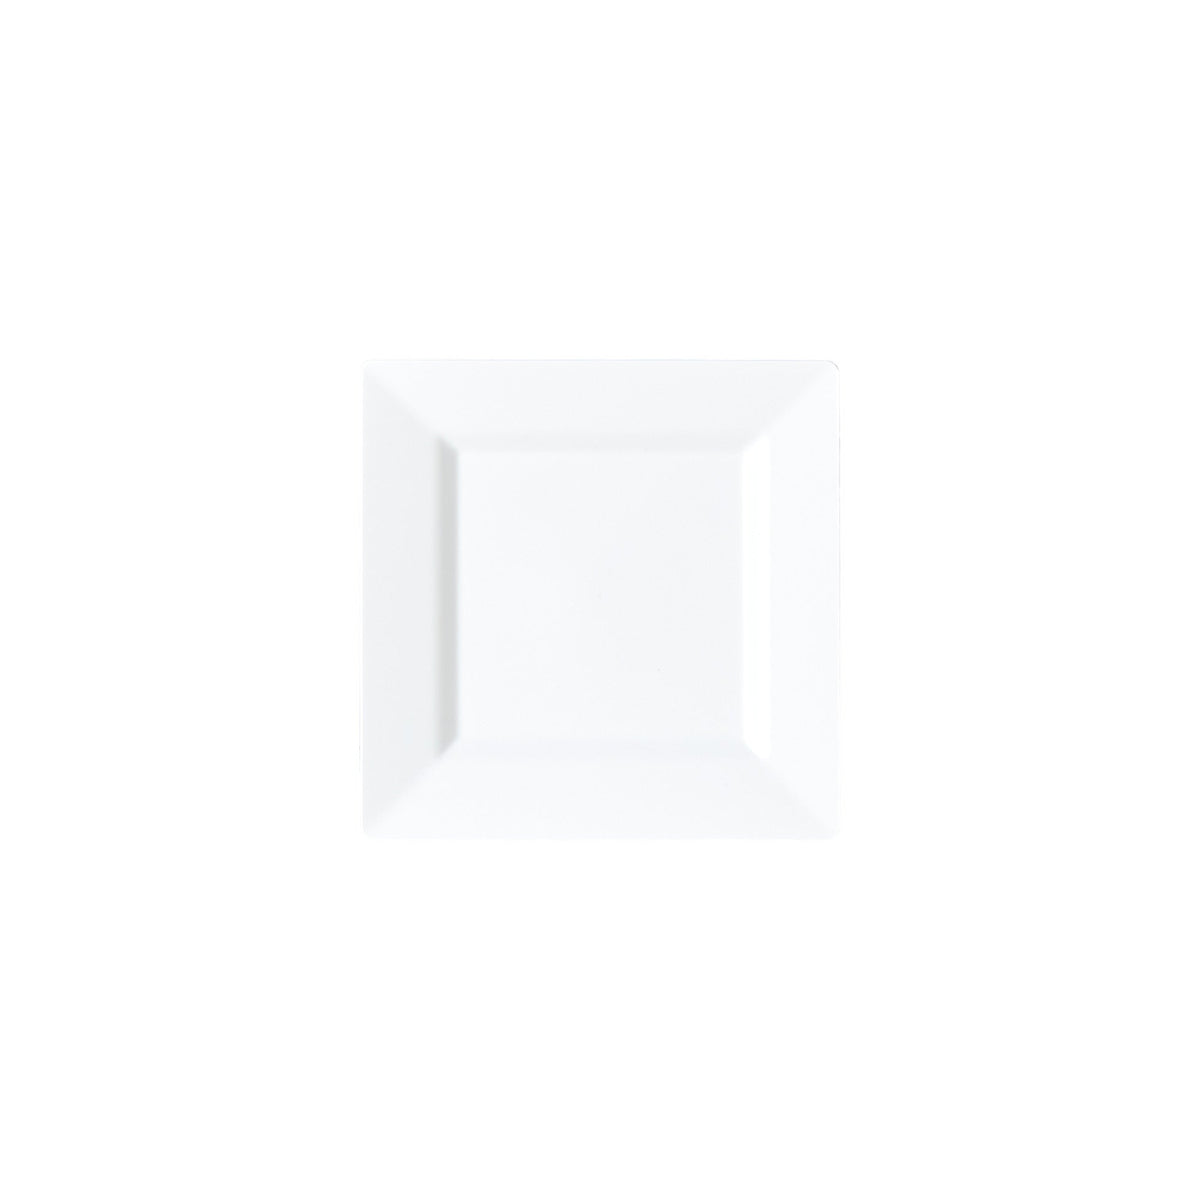 MADISON IMPORTS Disposable-Plasticware White Premium Quality Small Square Plates, 4.5 Inches, 10 Count 775310477490